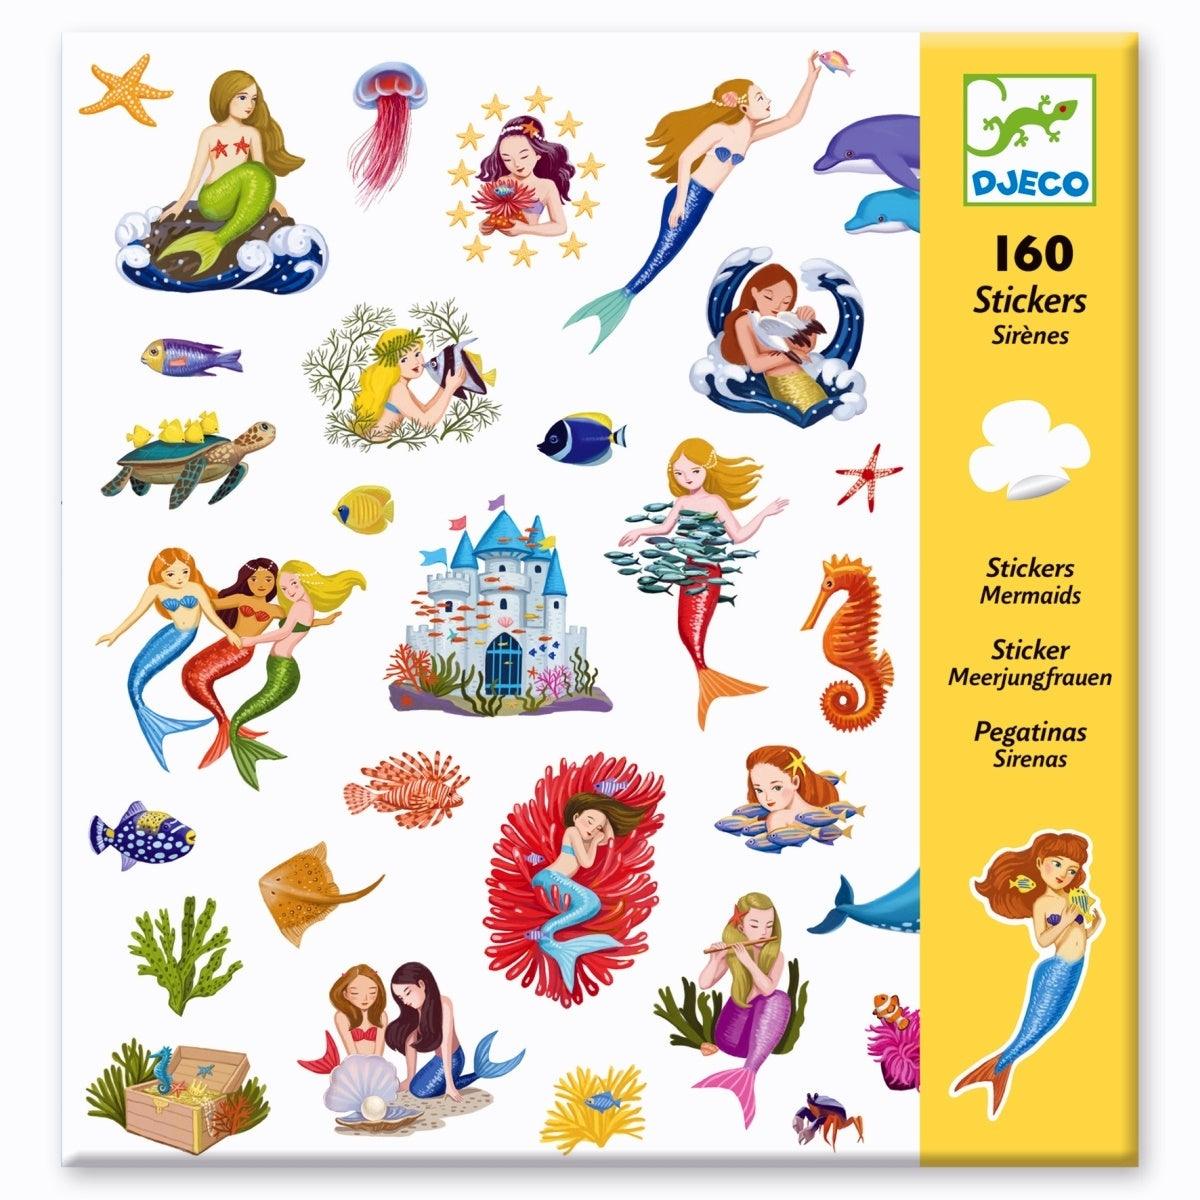 160 Sticker Meerjungfrauen - www. kunstundspiel .de 08885